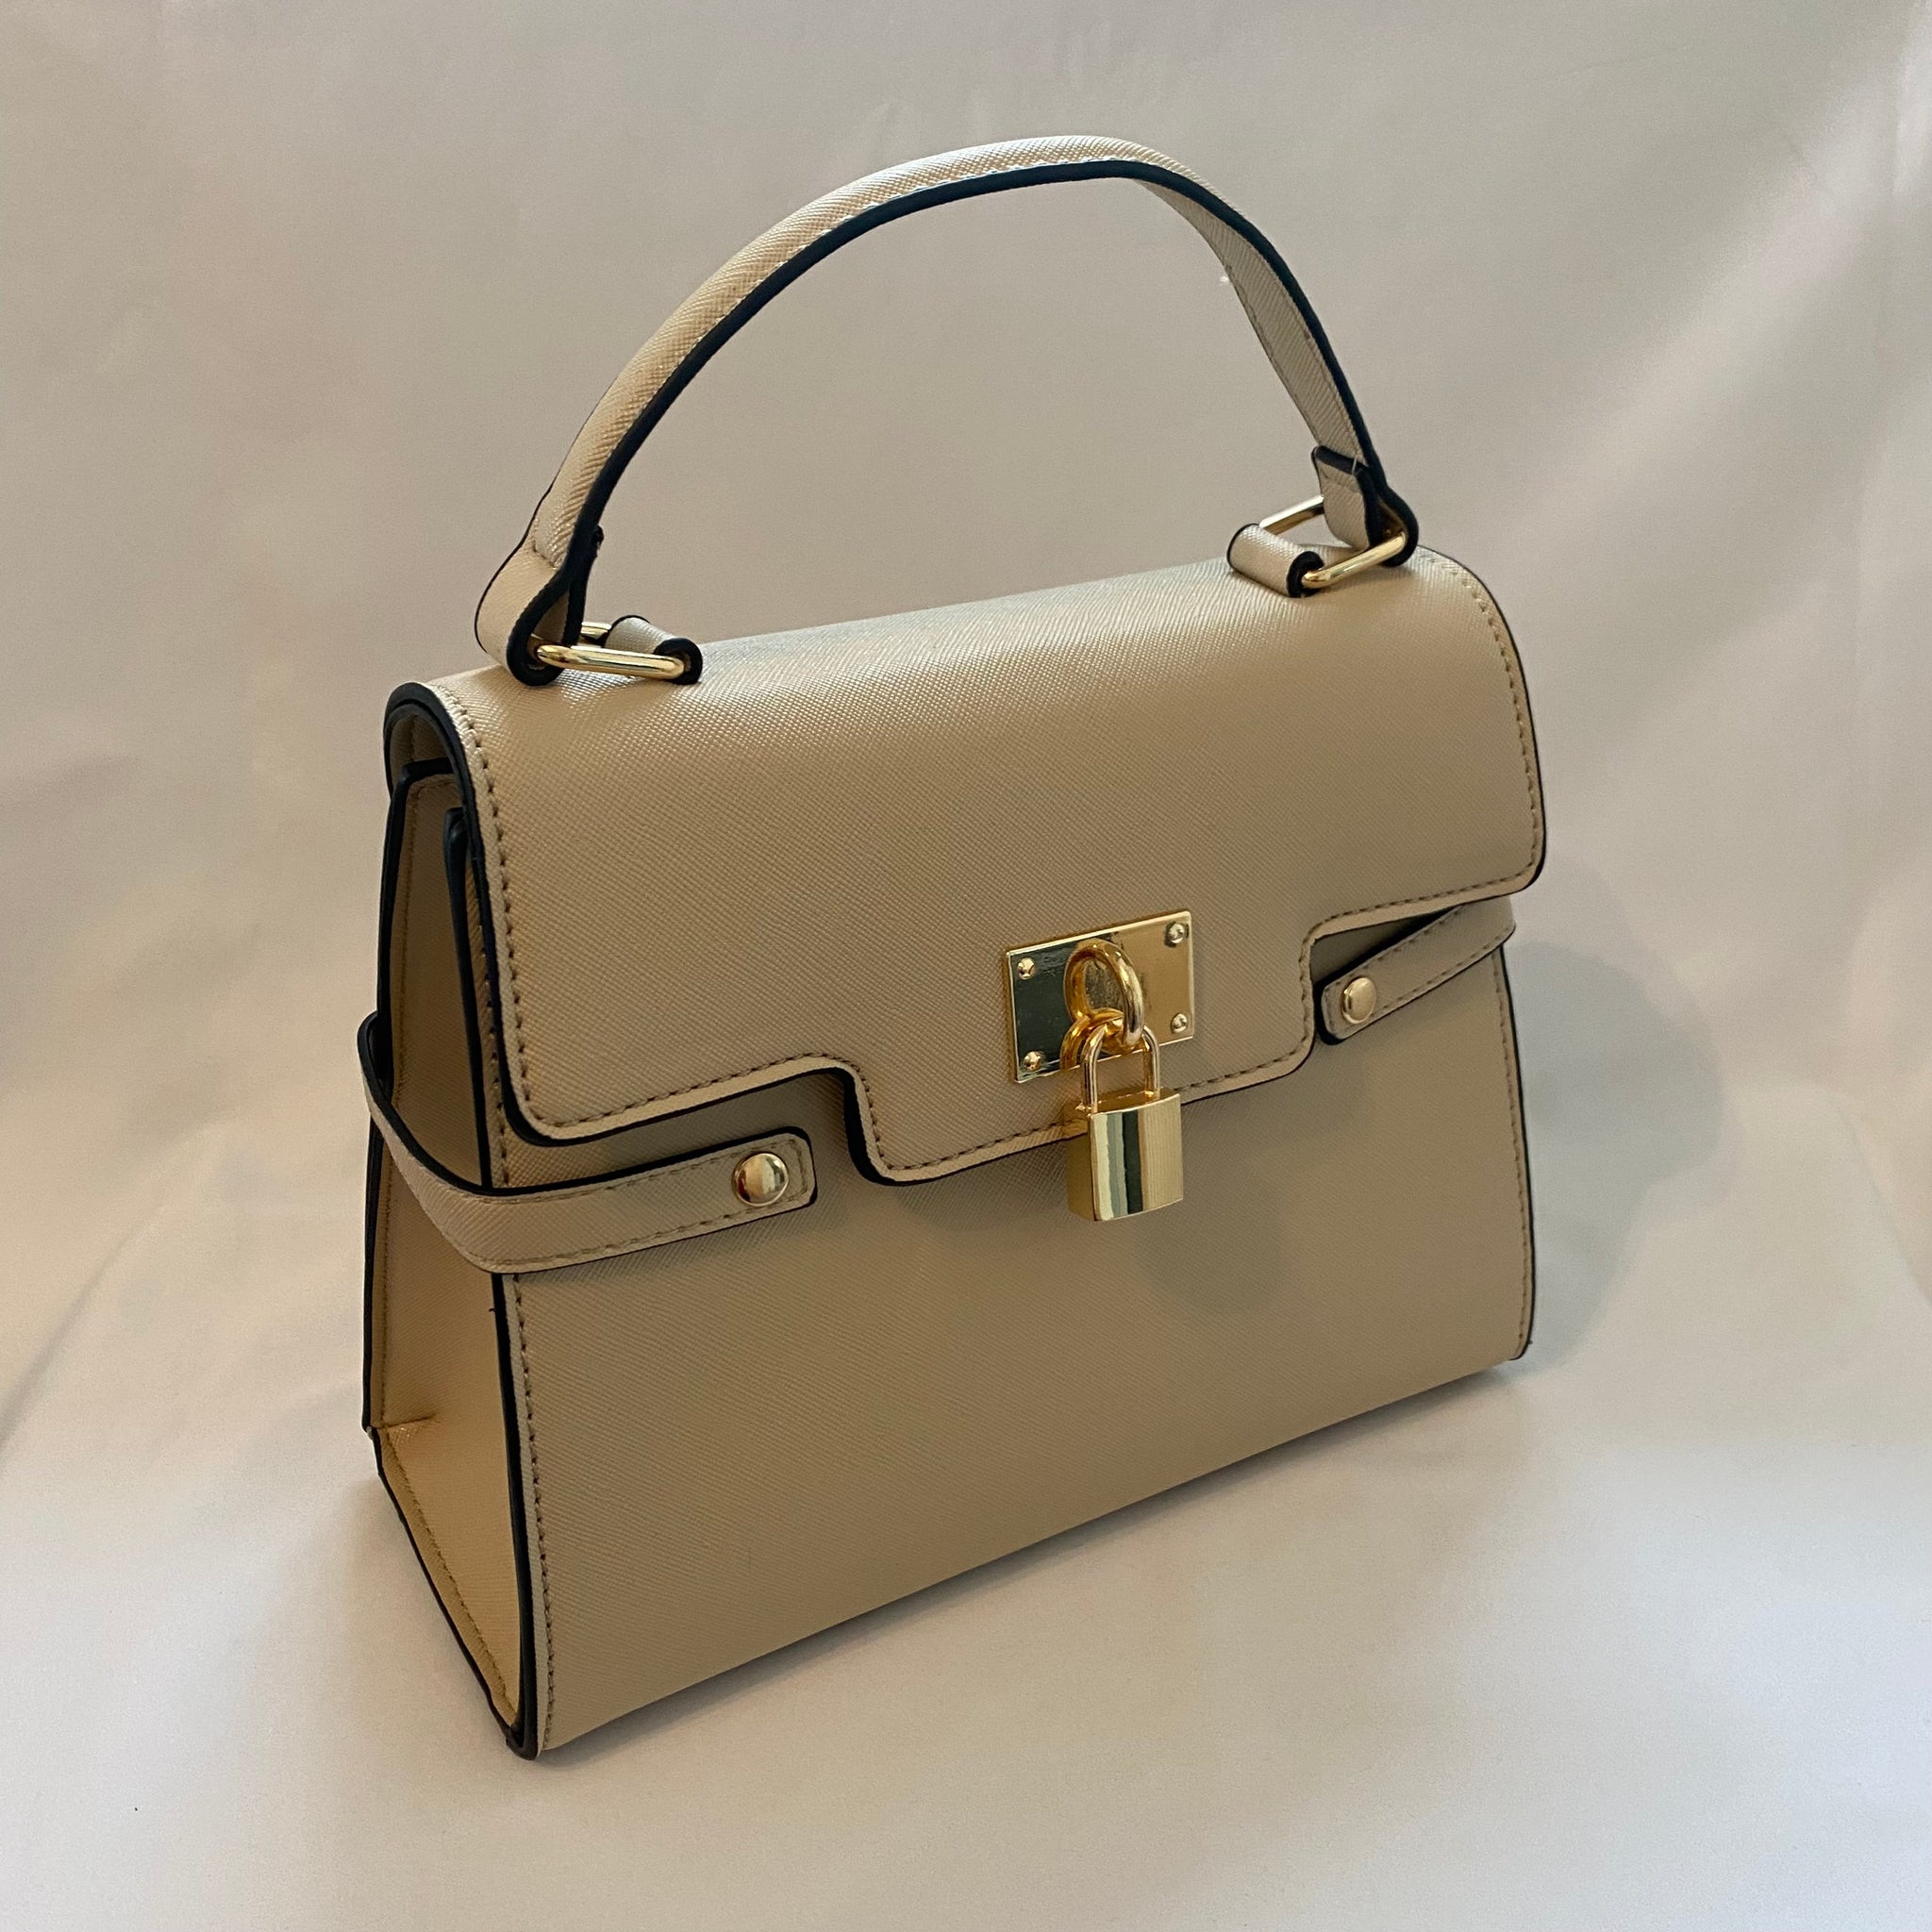 Classic Poppy Handbag in Stone - Vintage Inspired